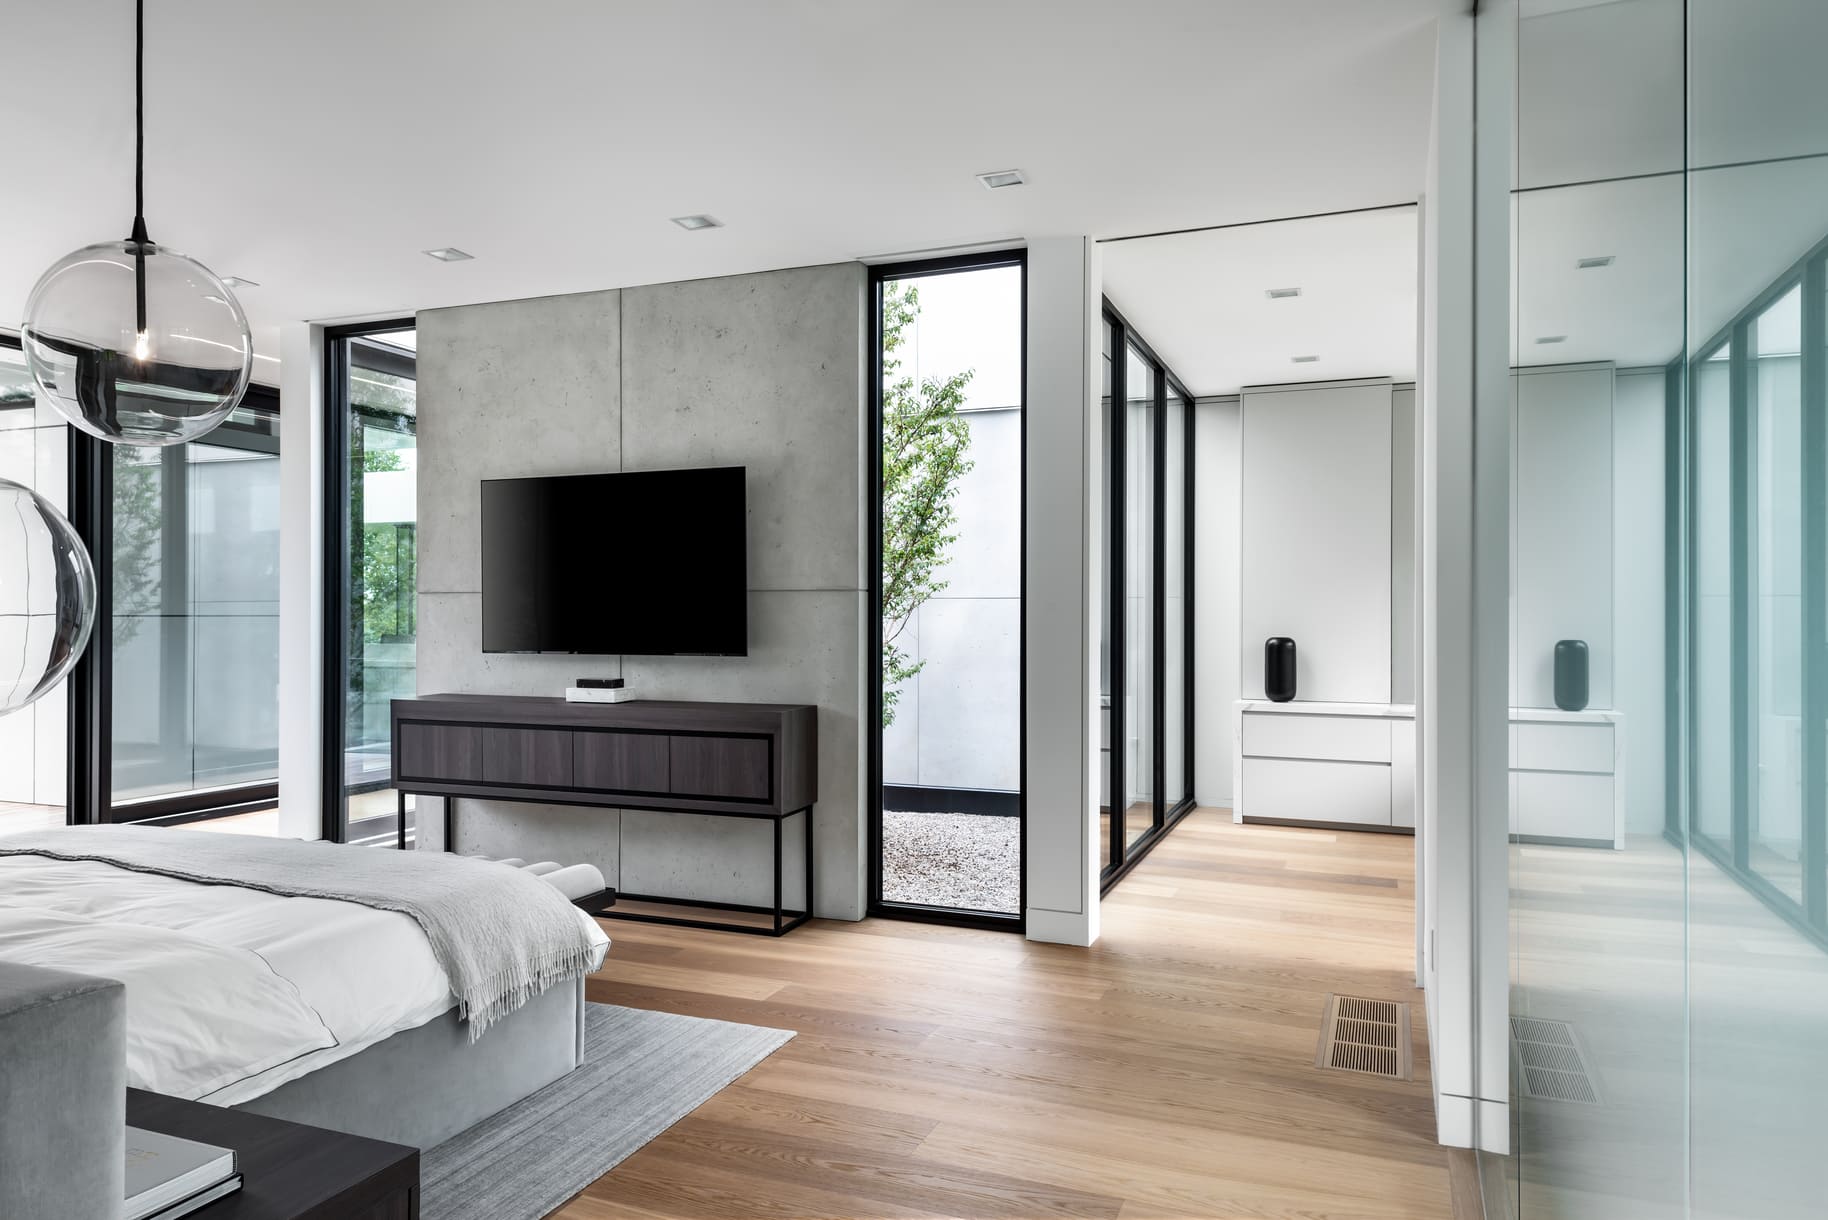 DB Custom Homes blends sophistication, elegance, and liveability.